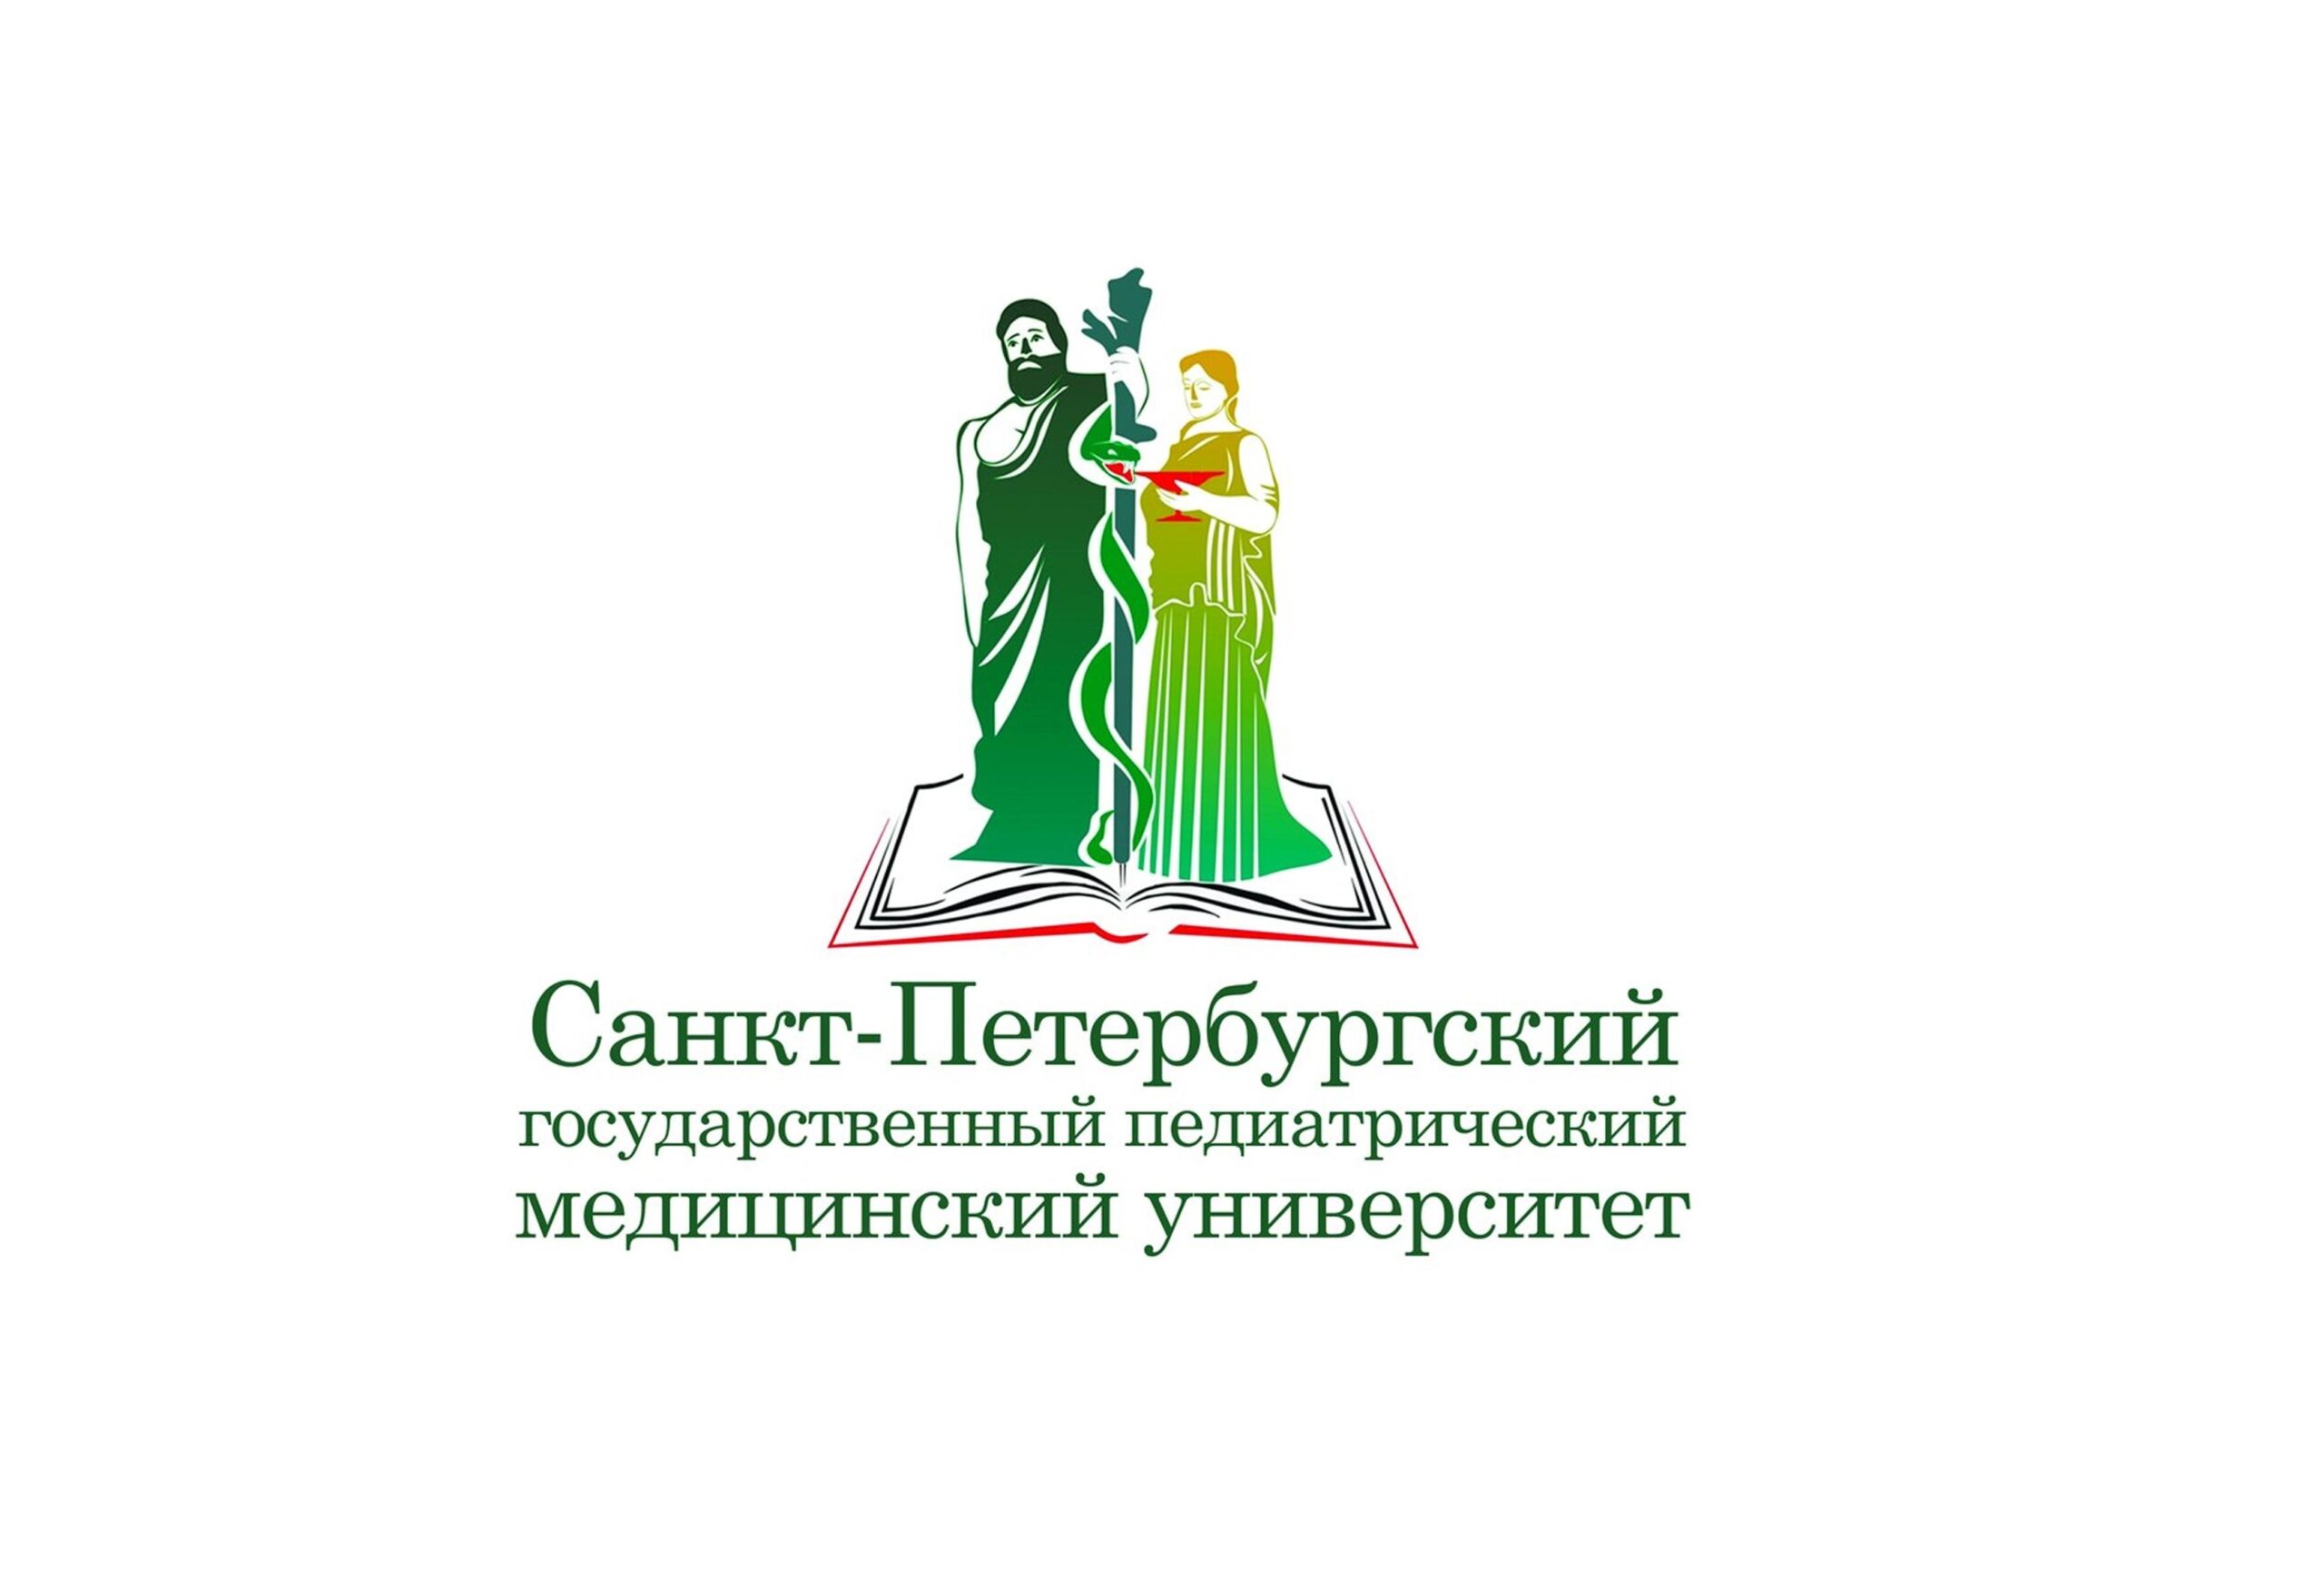 ST. Petersburg State Pediatric Medical University